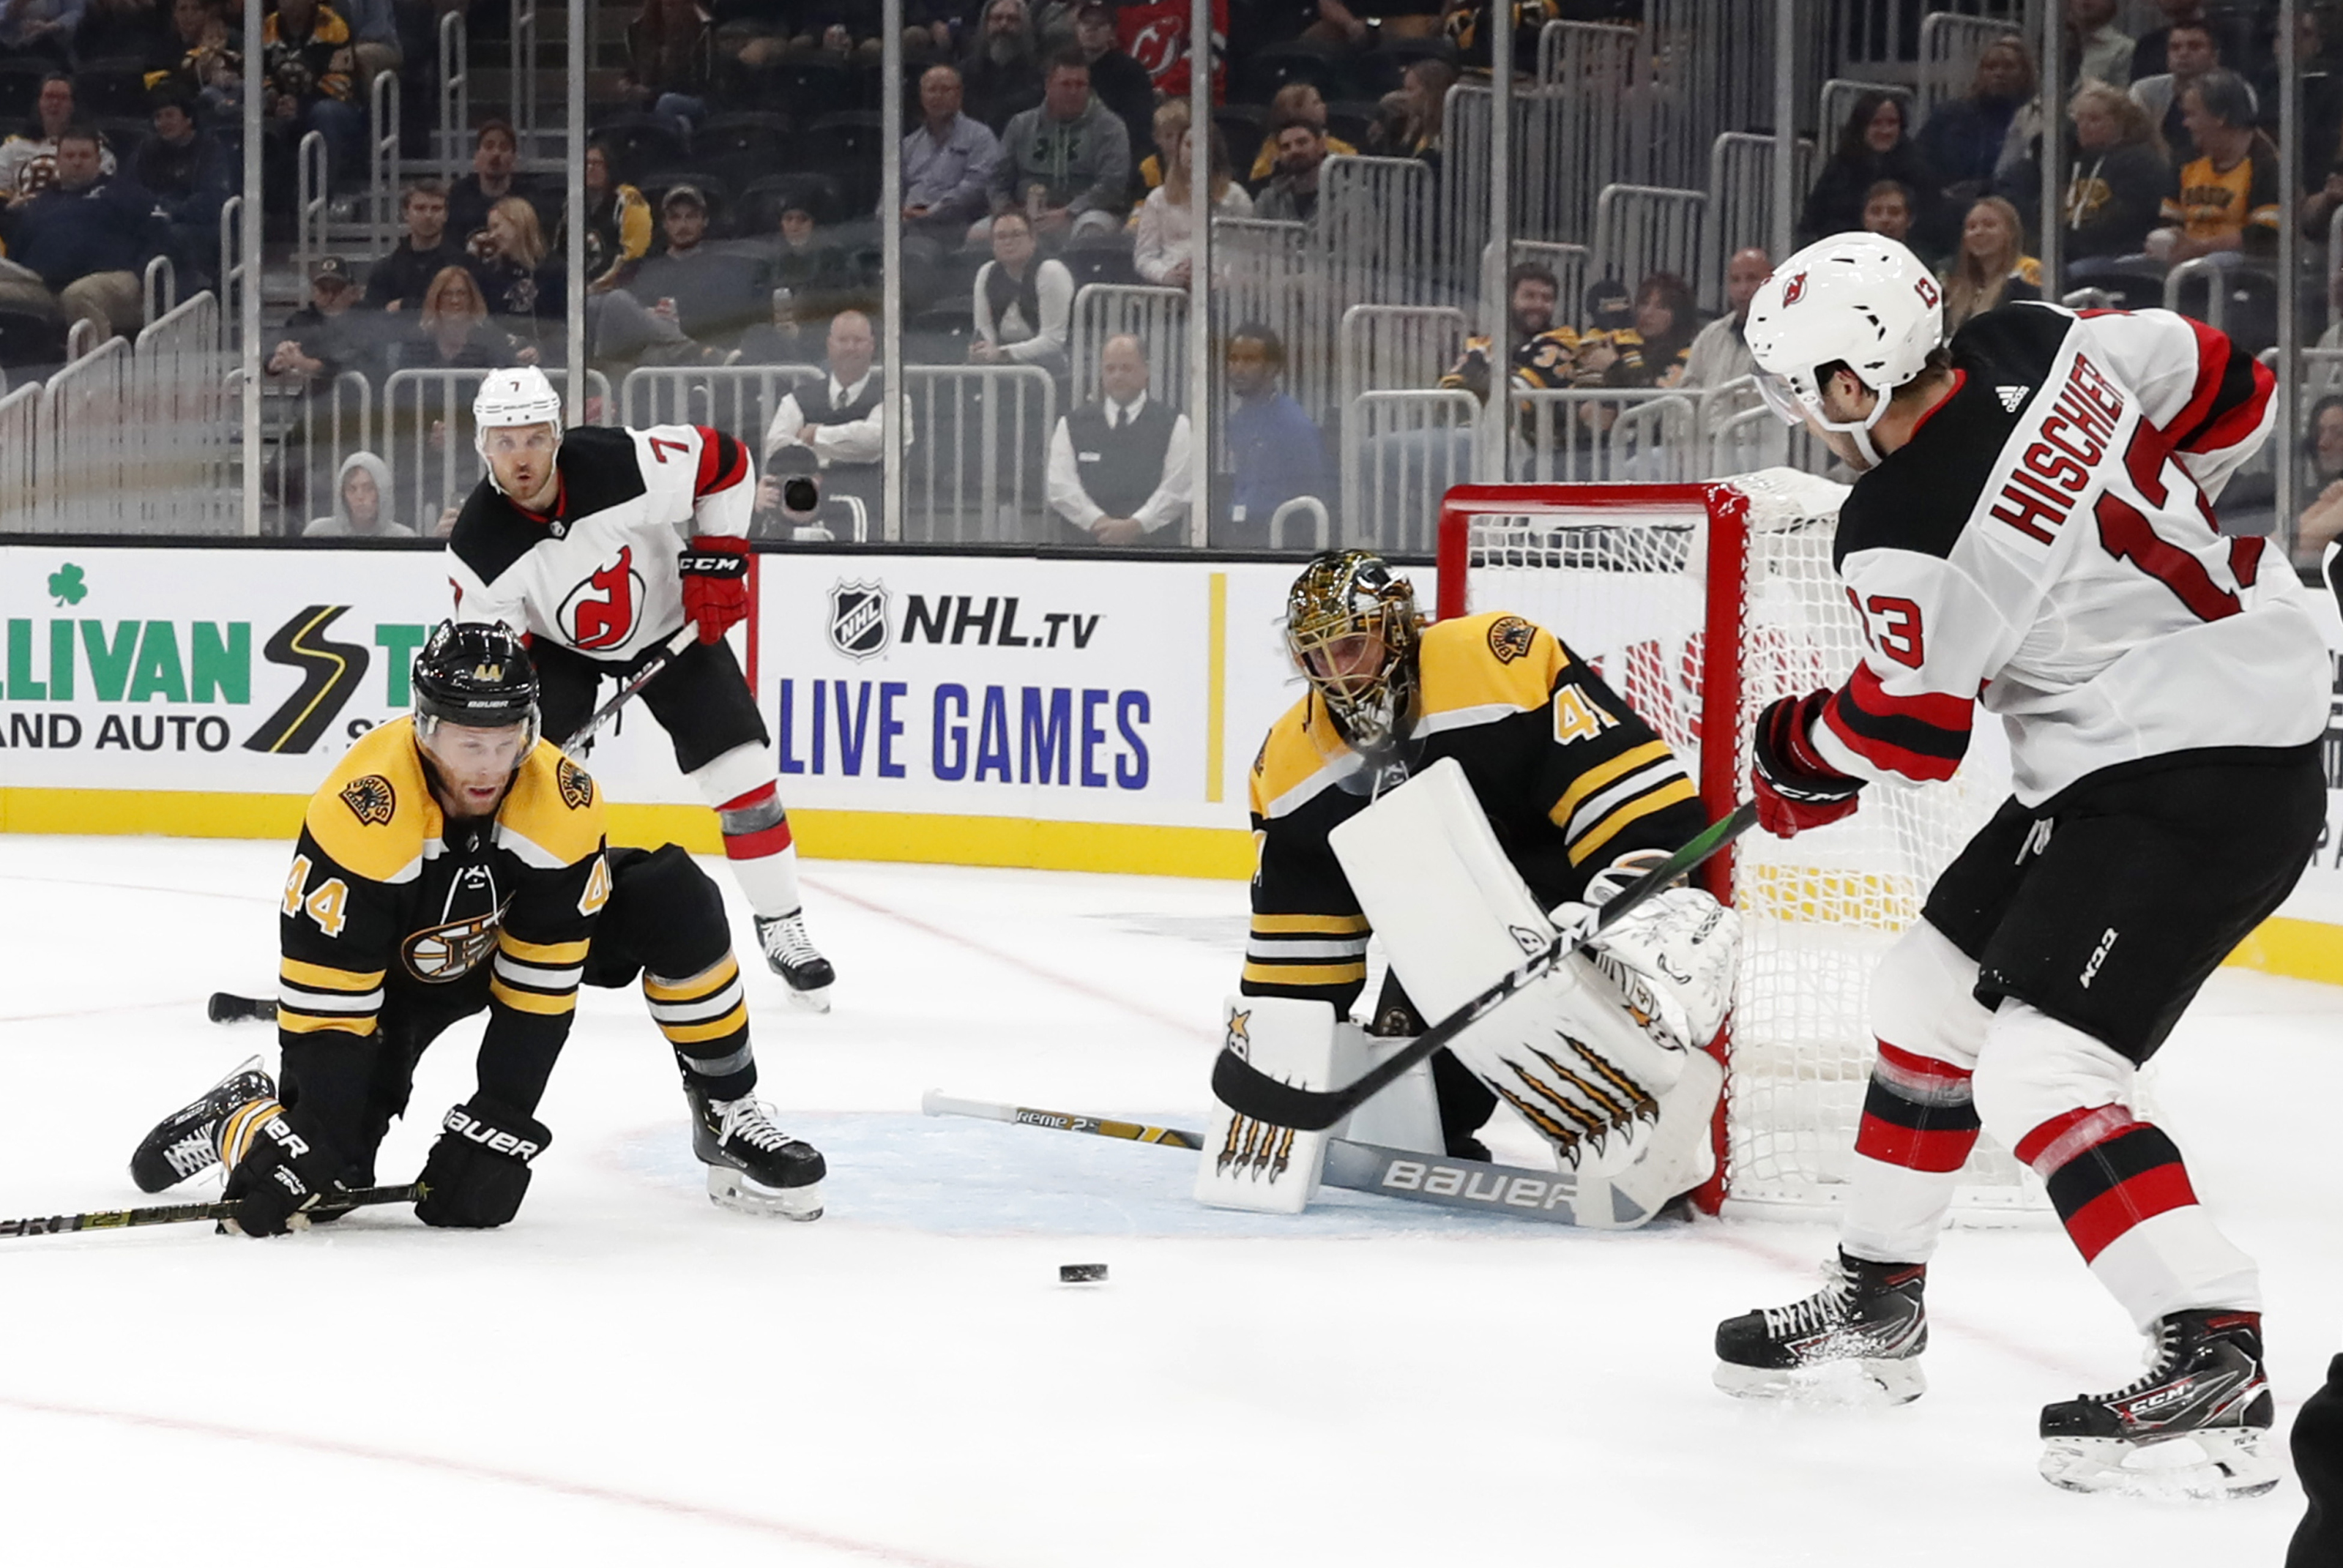 Bruins blank Devils in home opener at TD Garden